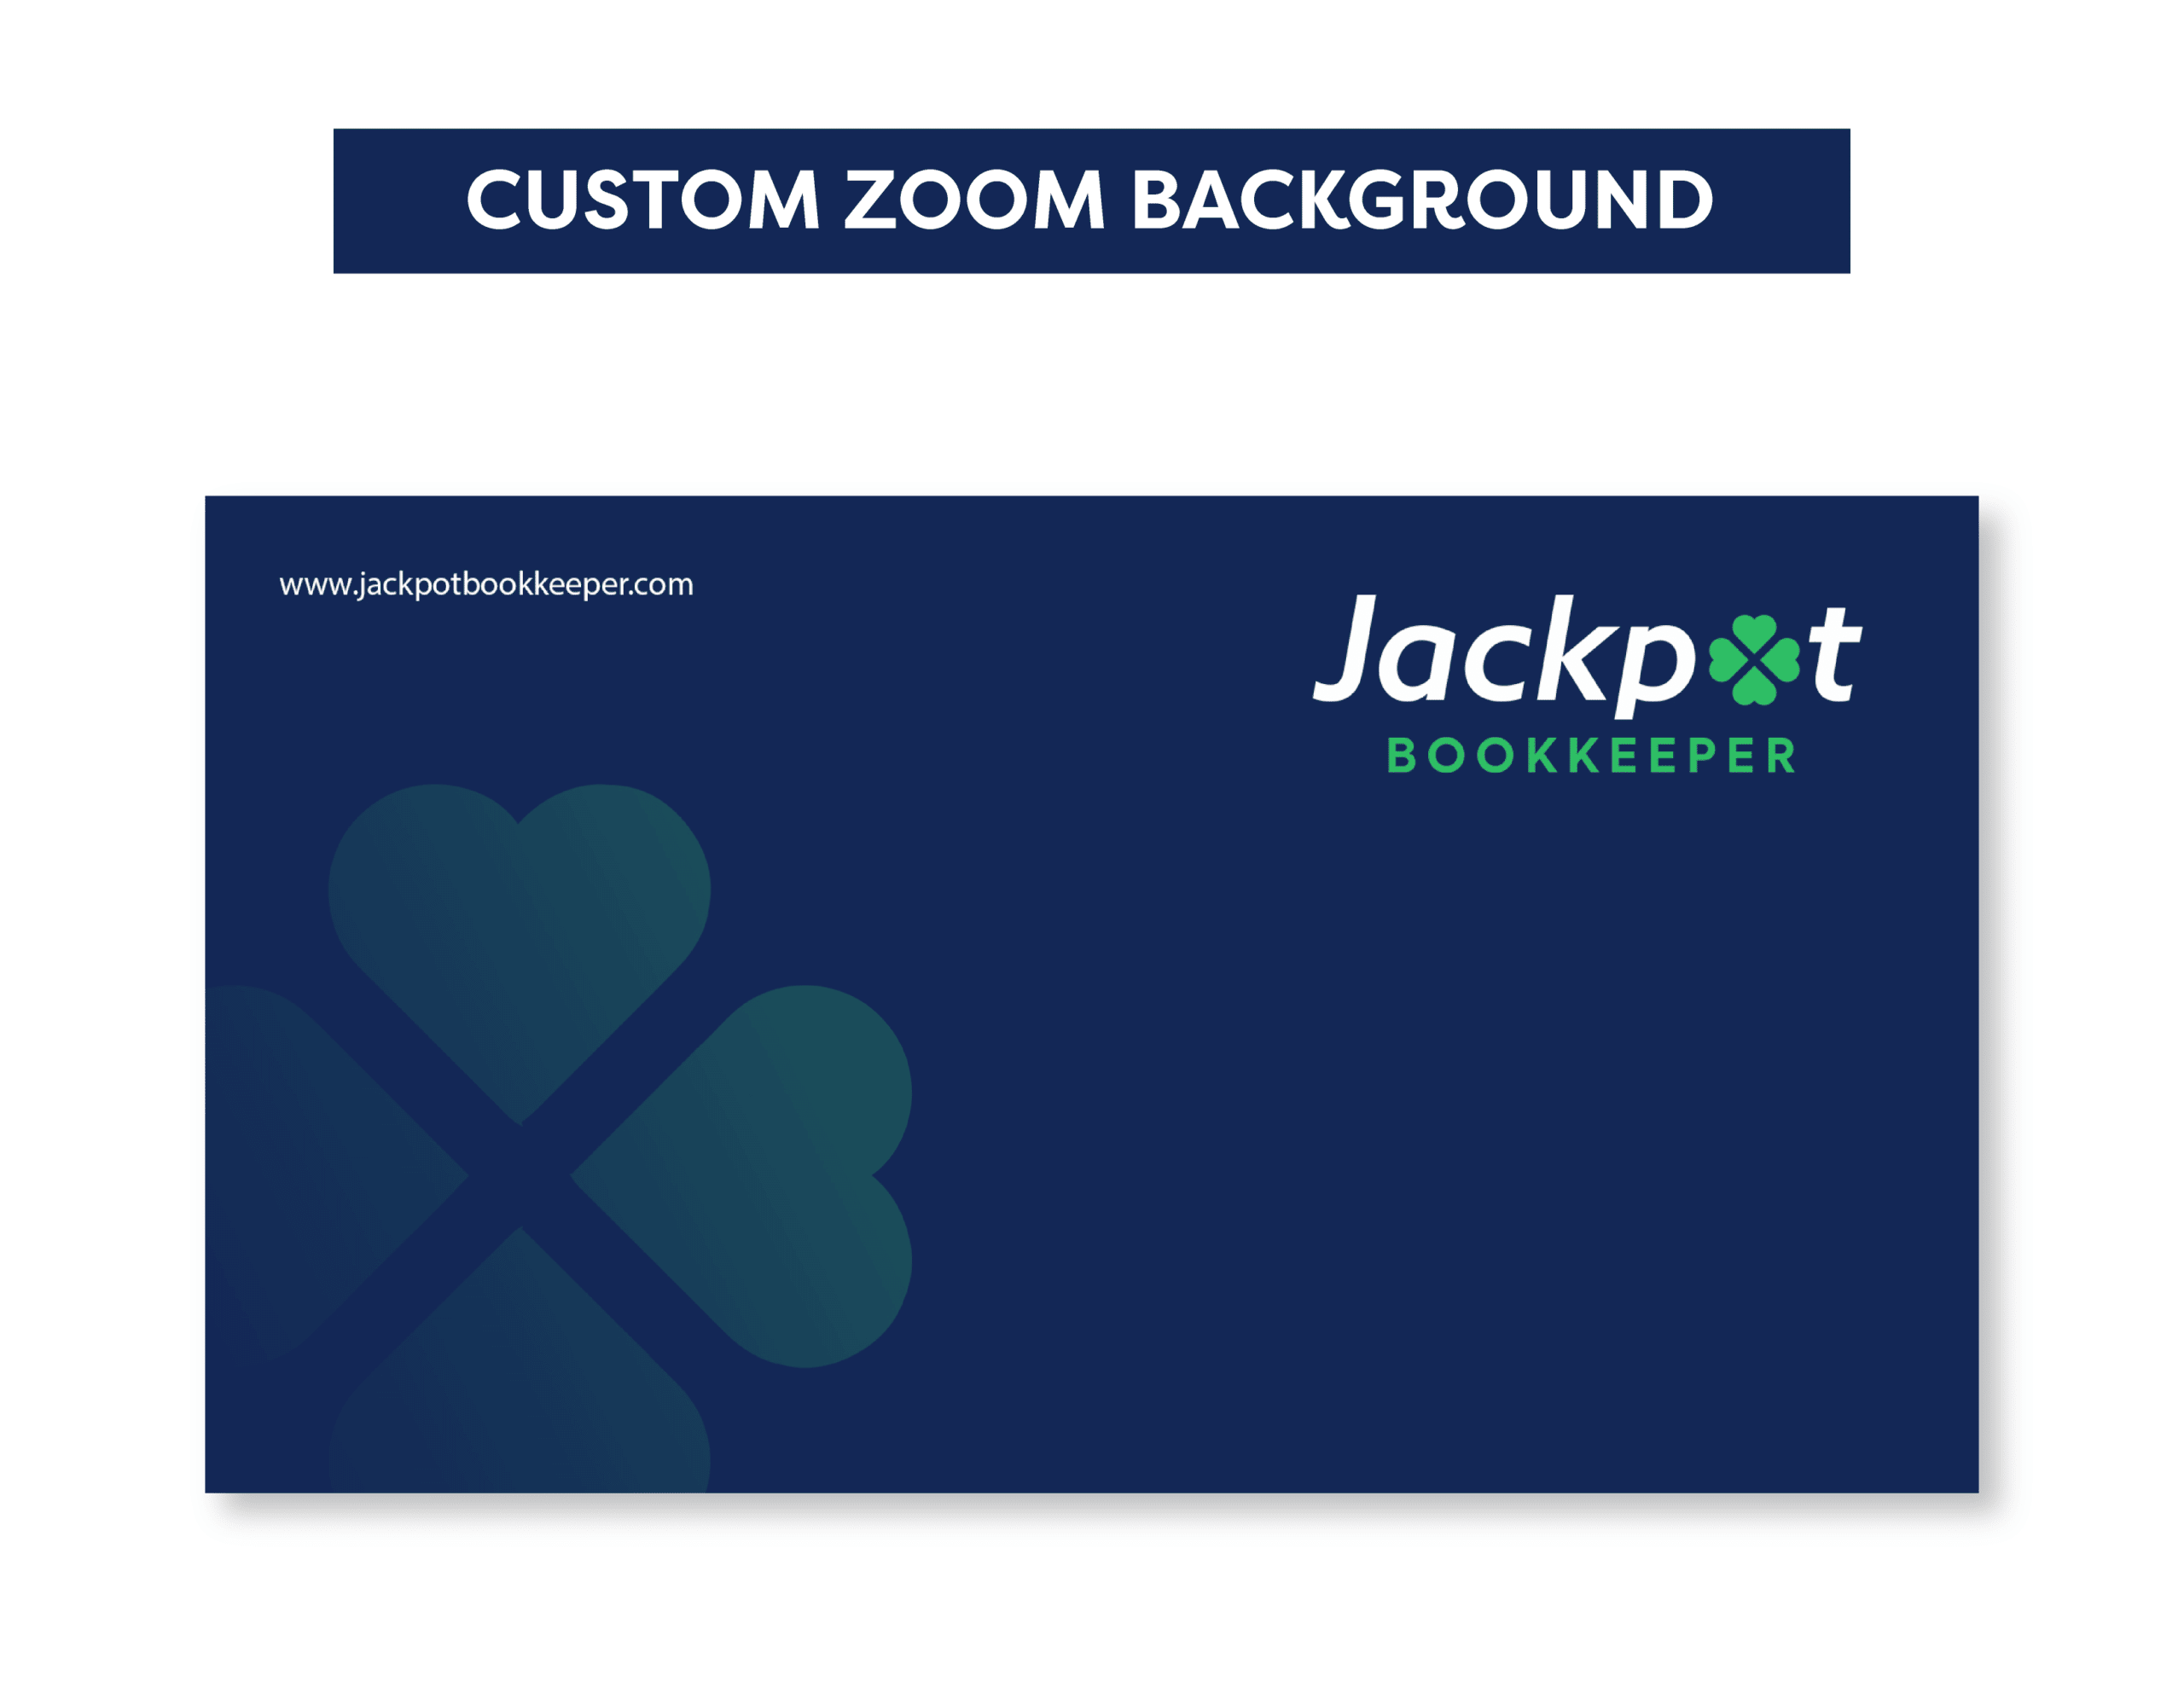 07Jackpot_BK__Custom Zoom Background